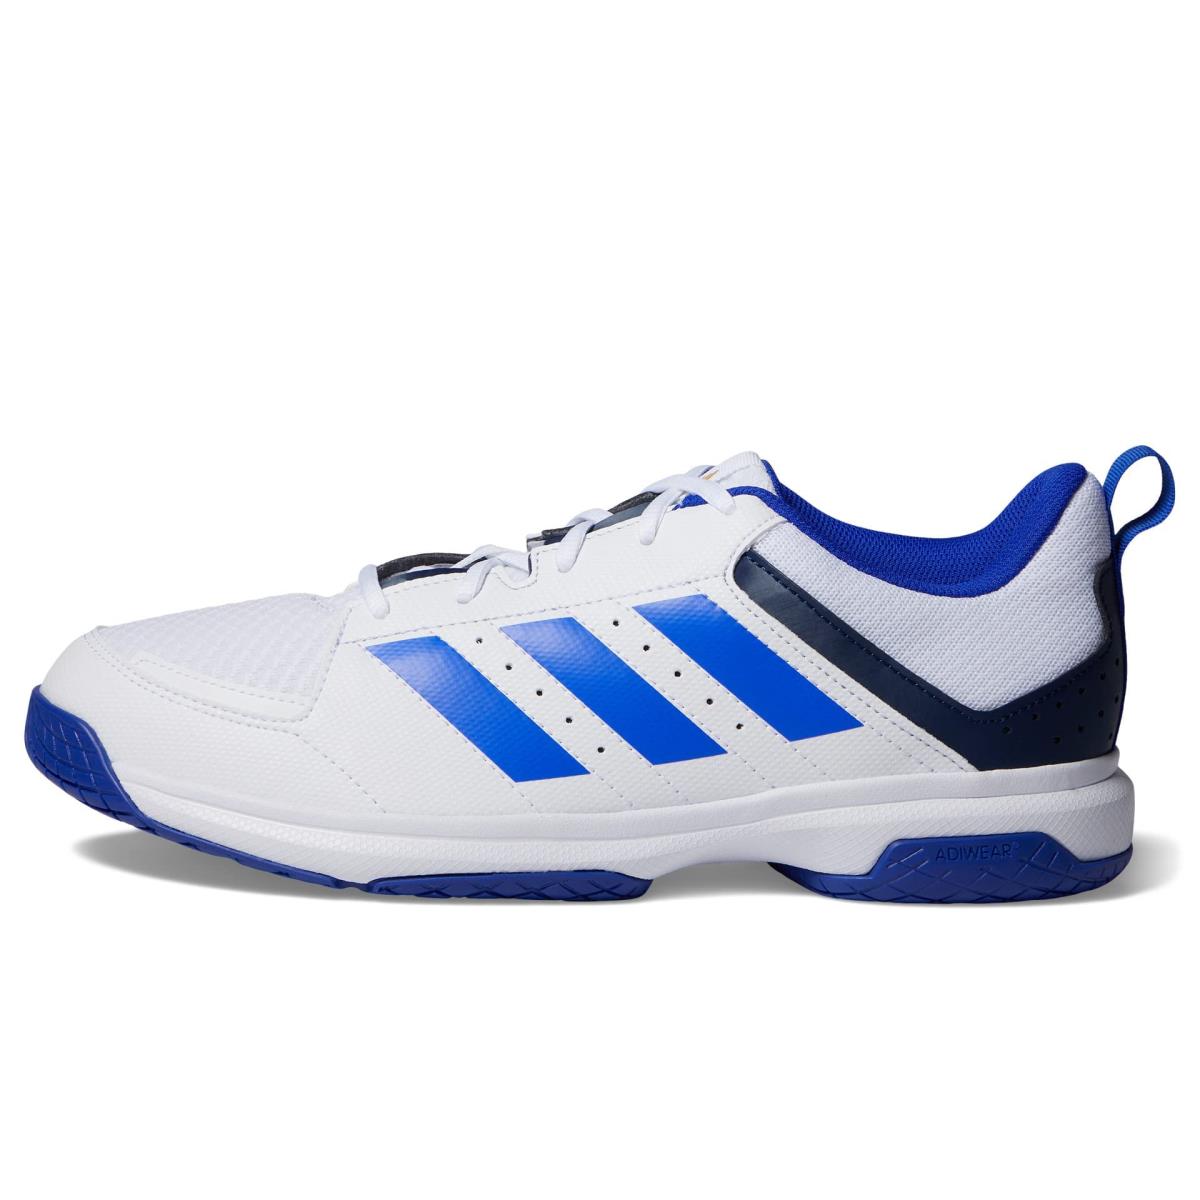 Adidas Men`s Ligra 7 Track and Field Shoe White/Lucid Blue/Team Navy Blue